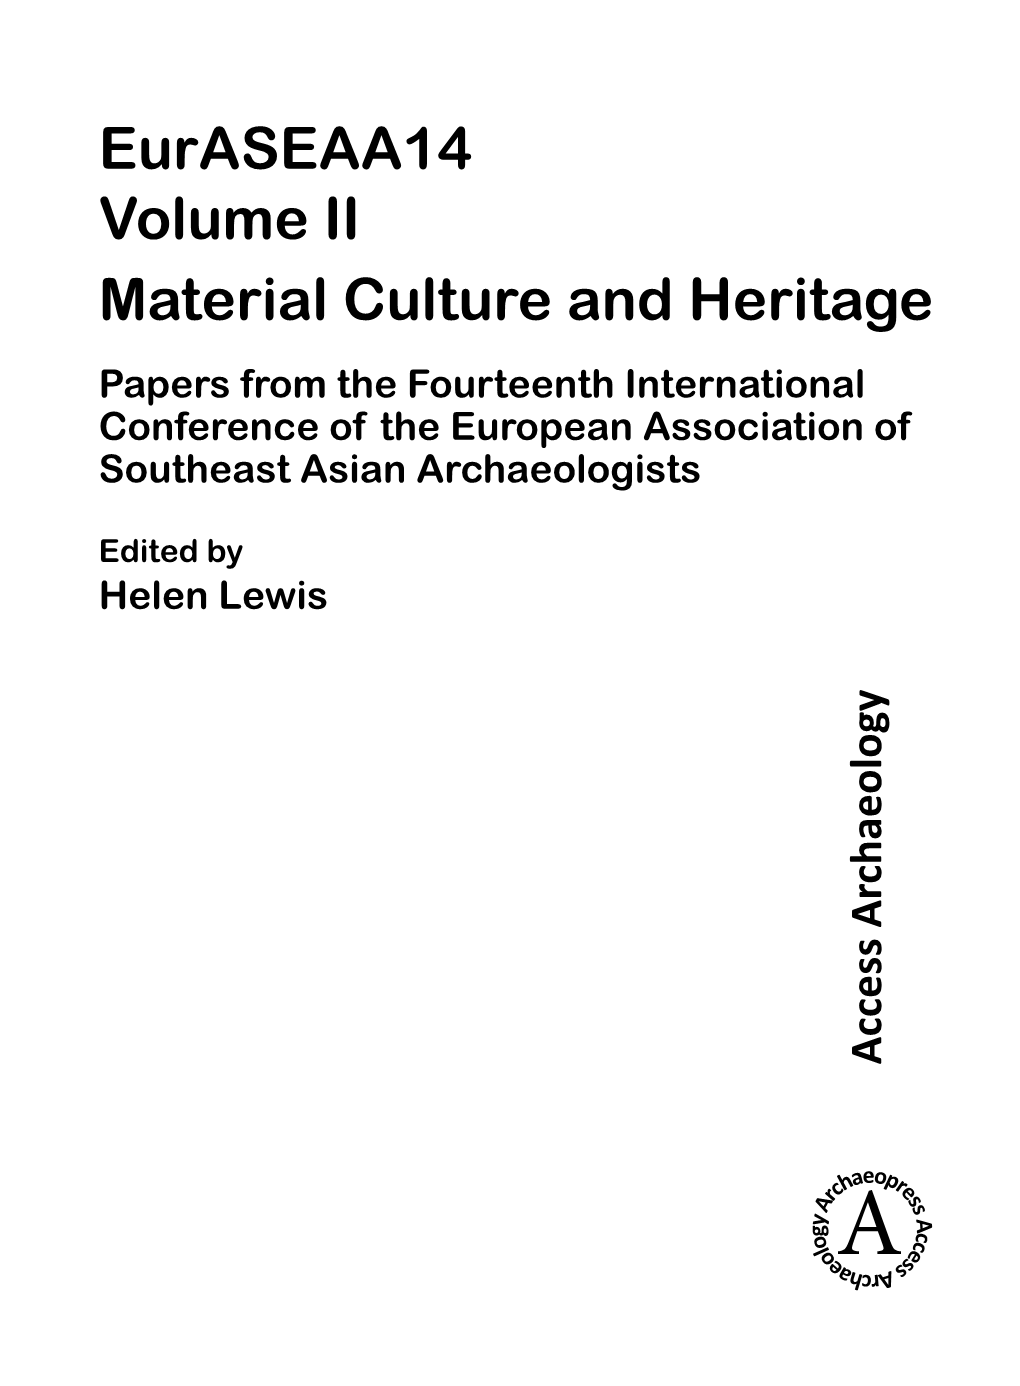 Euraseaa14 Volume II: Material Culture and Heritage